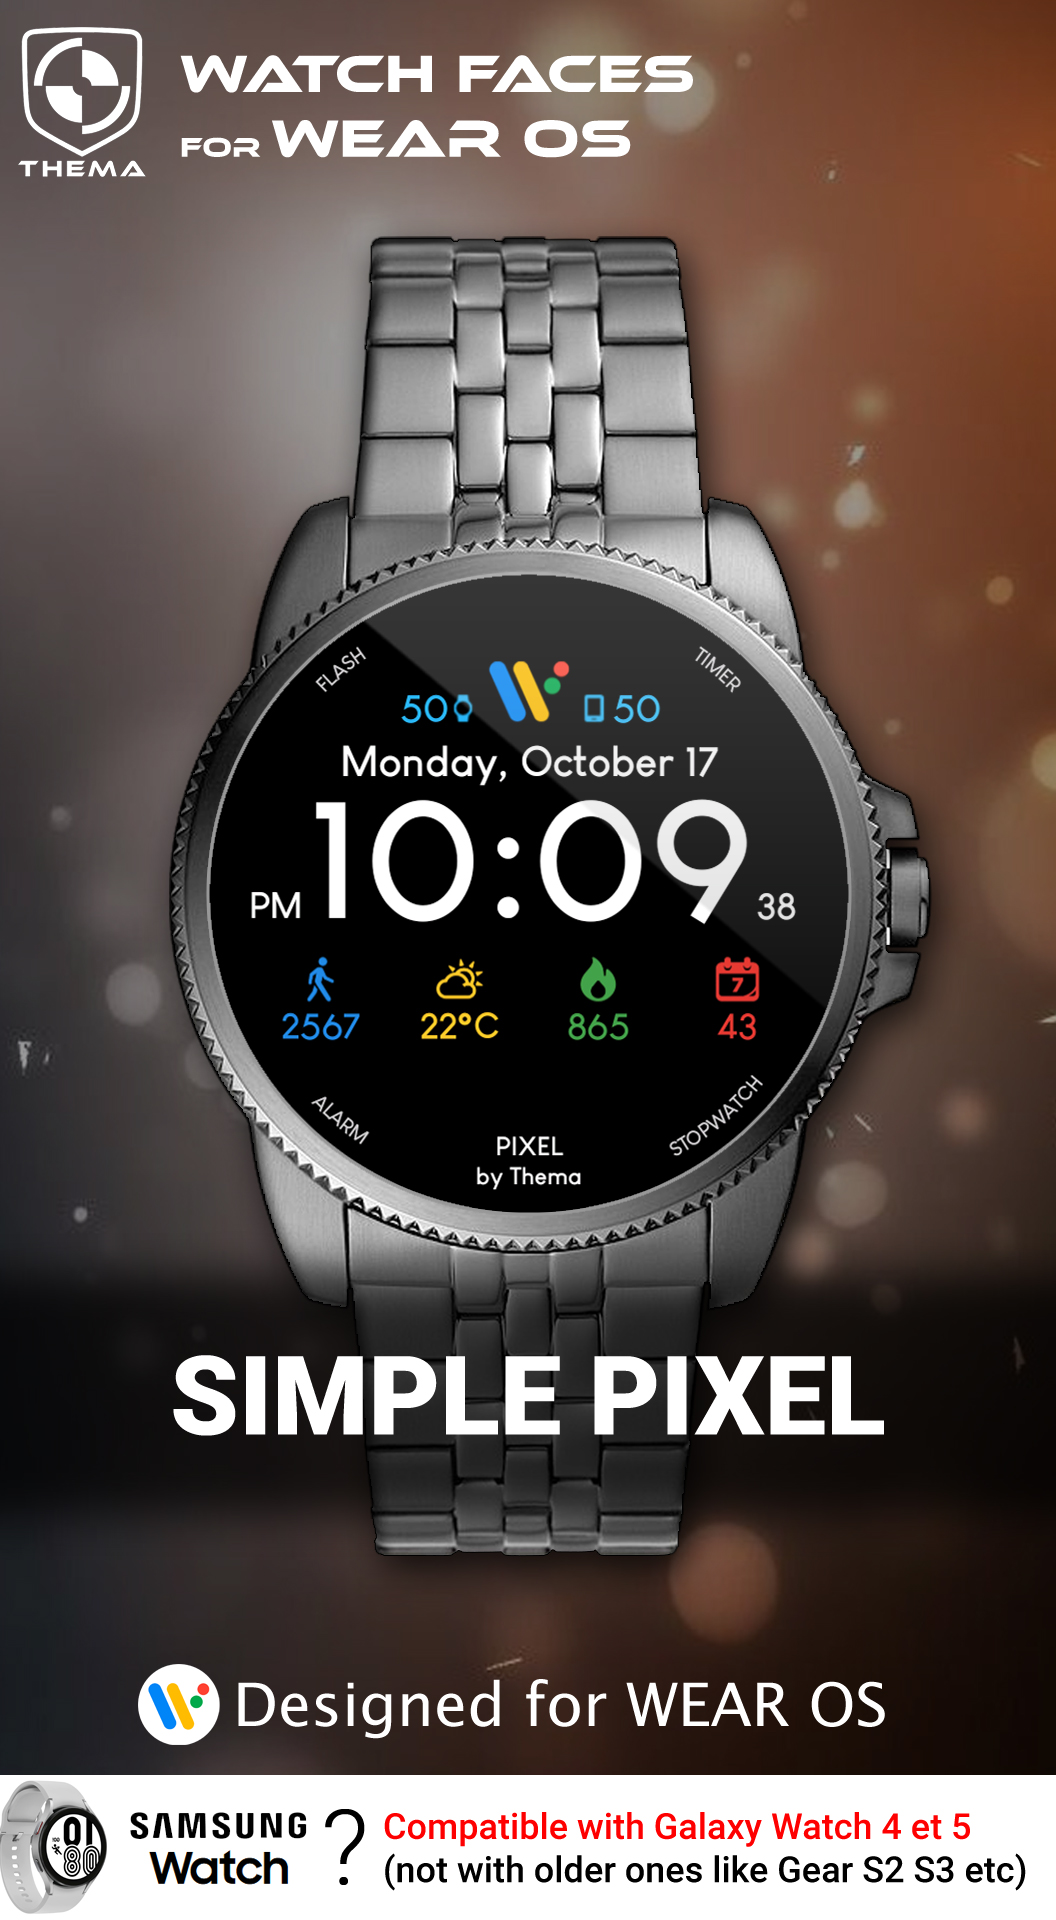 Simple Pixel Watch Face